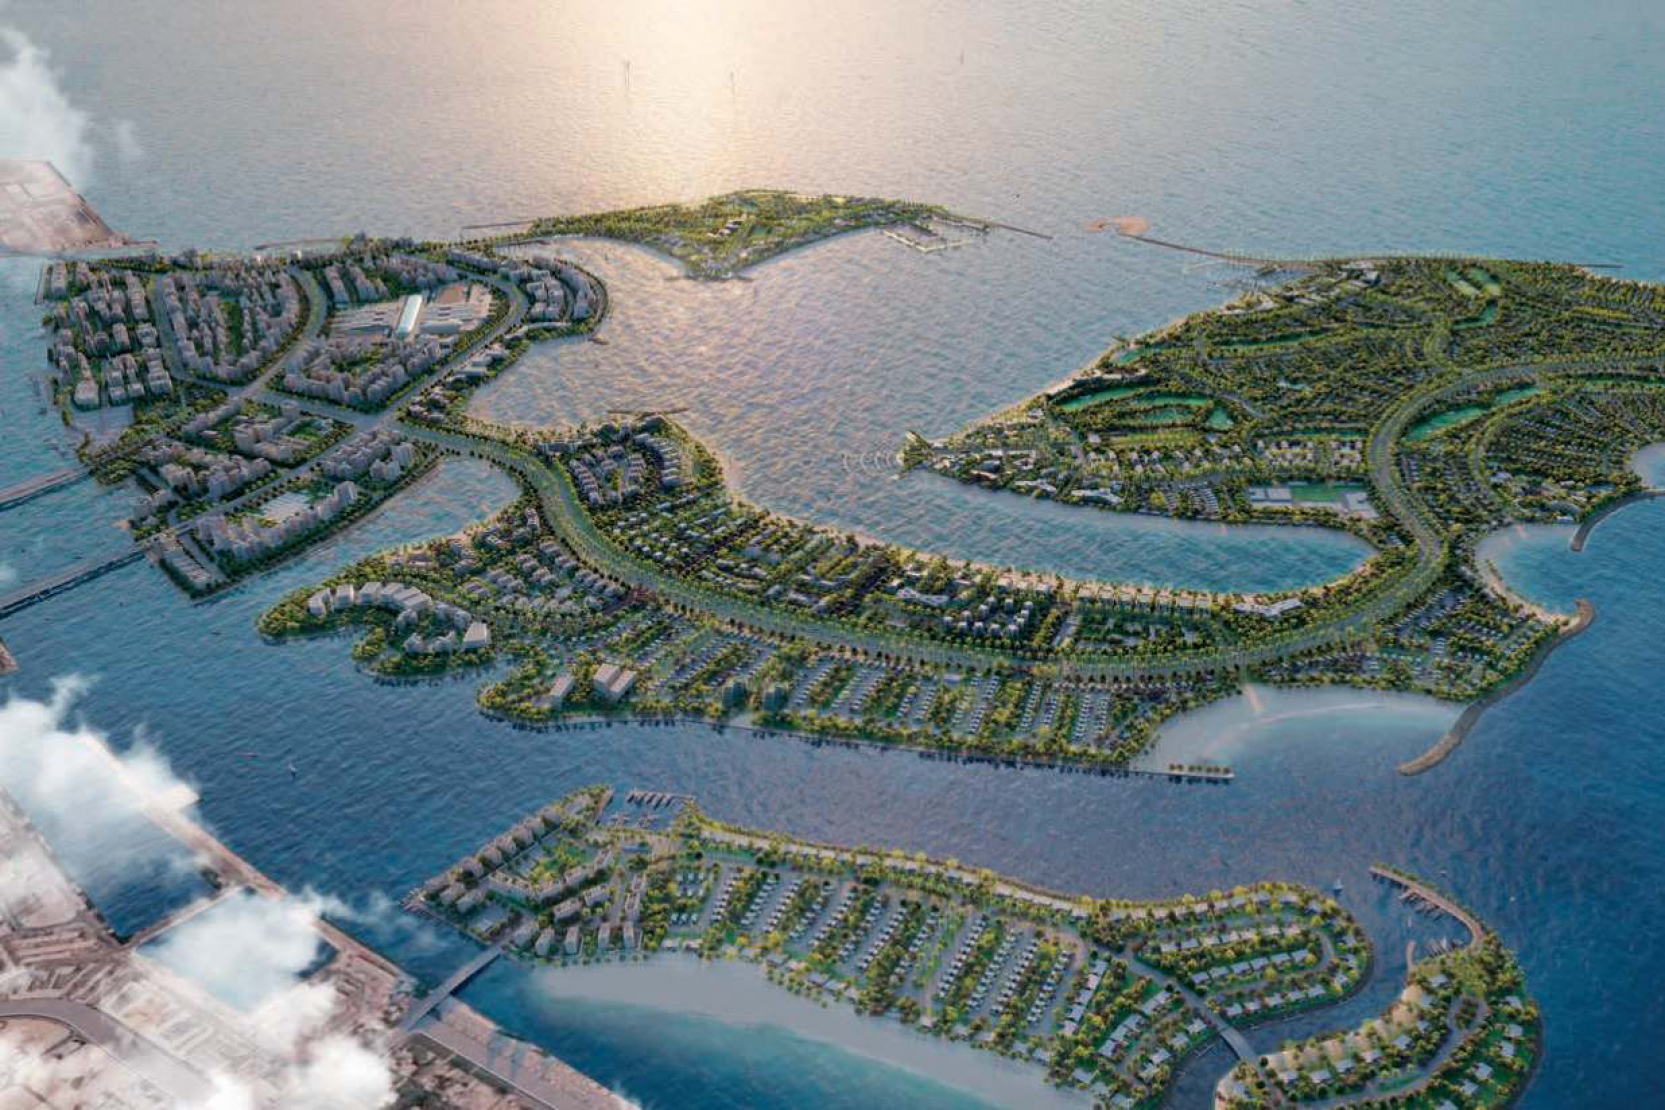 Rixos Phase 2 by Nakheel in Dubai Islands